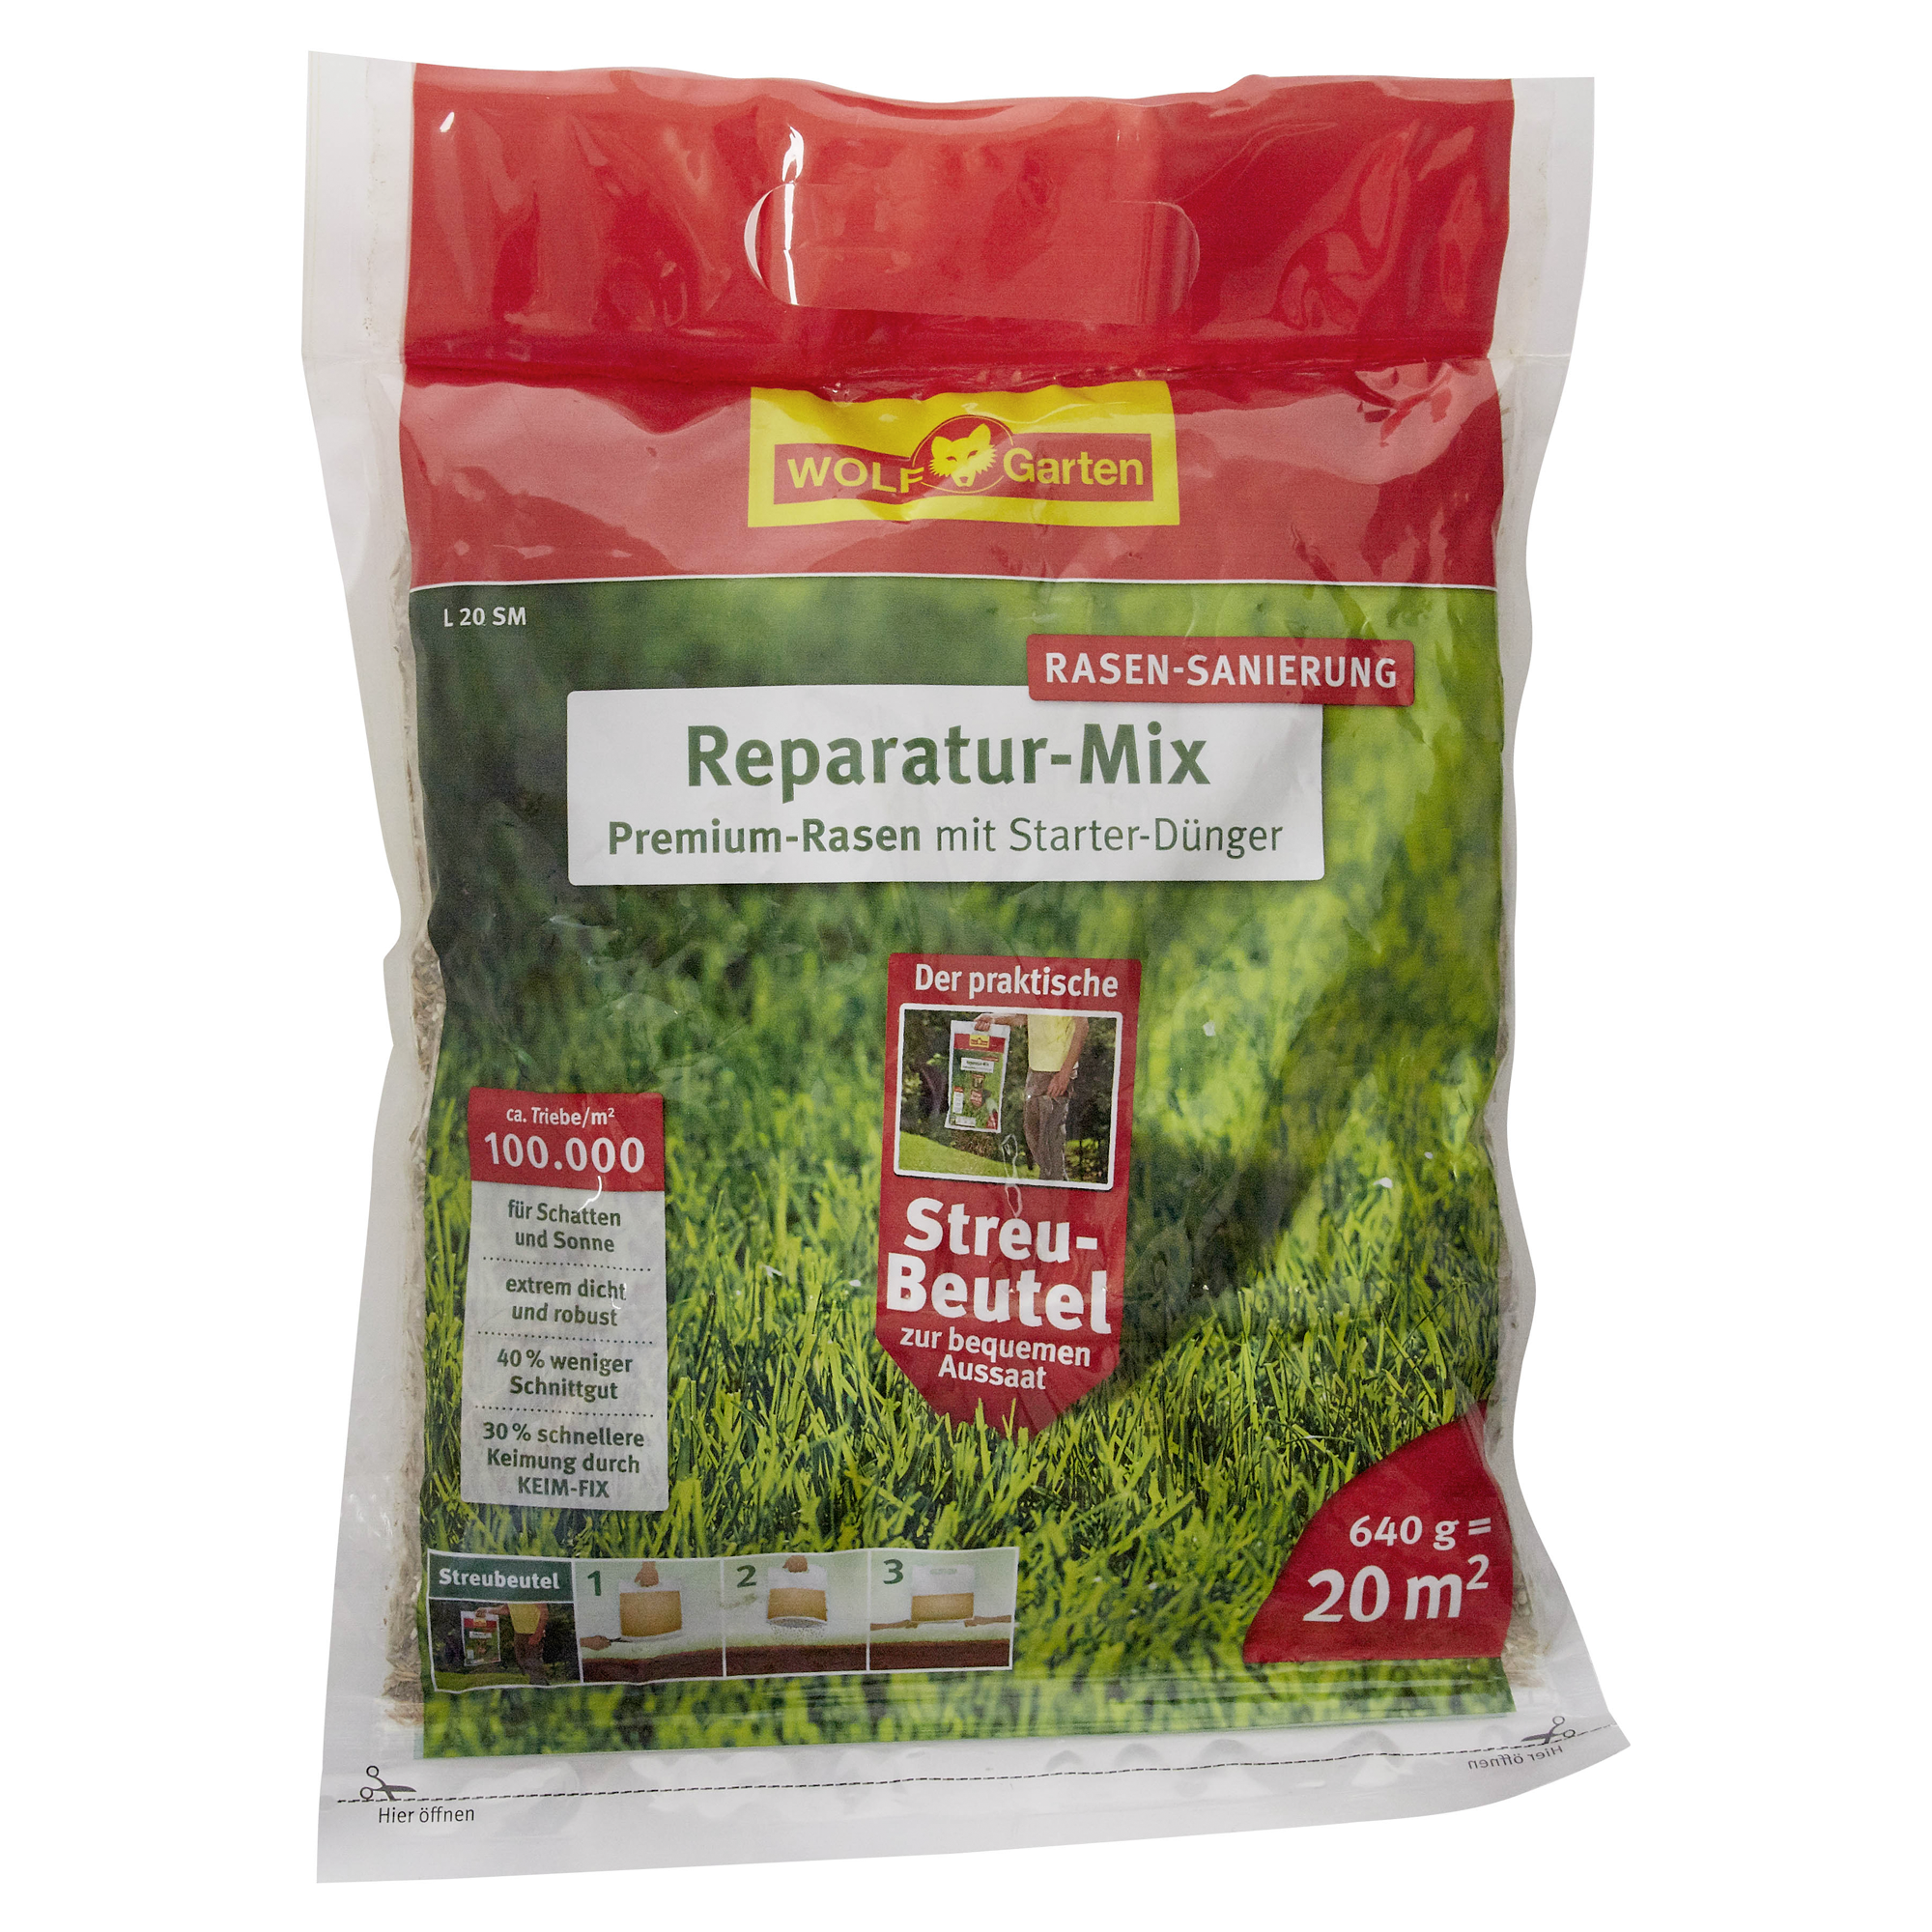 Reparatur-Mix Premium Rasen mit Dünger 20 m² 640 g + product picture